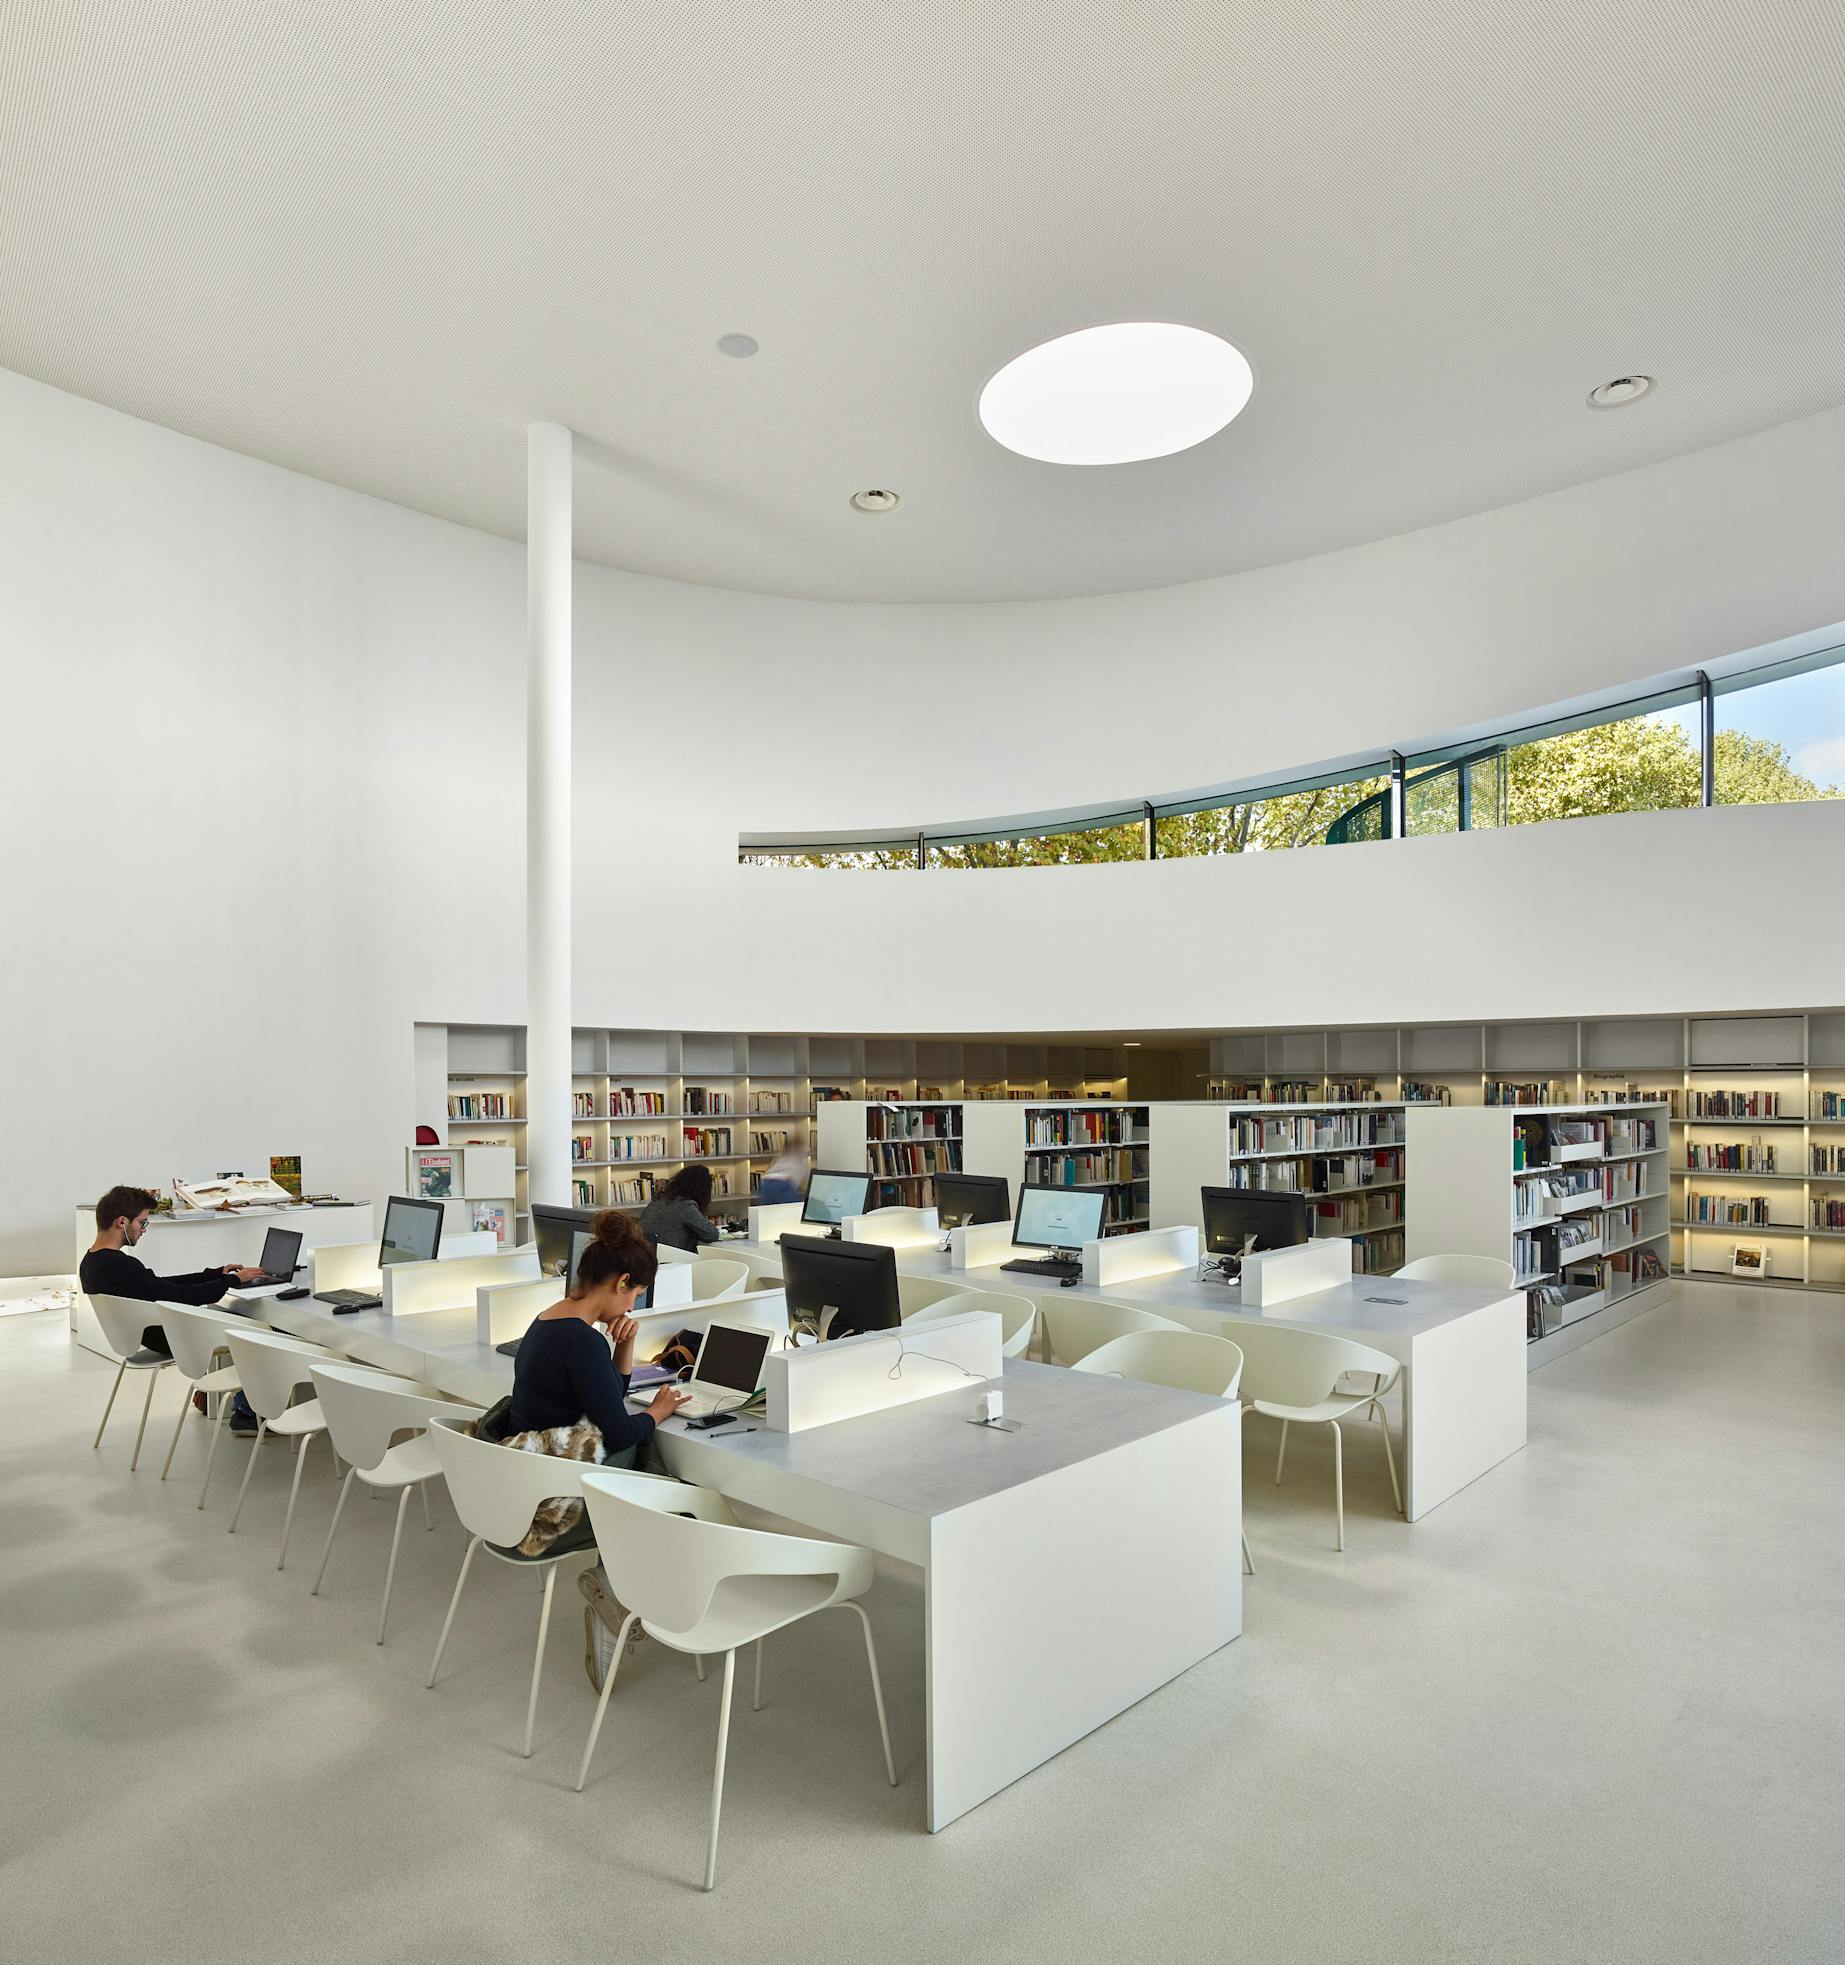 Media library. Библиотека в Тьонвиле. Библиотека Тьонвиль Франция. Медиа-библиотека в Тьонвиле, Франция. Современная библиотека.